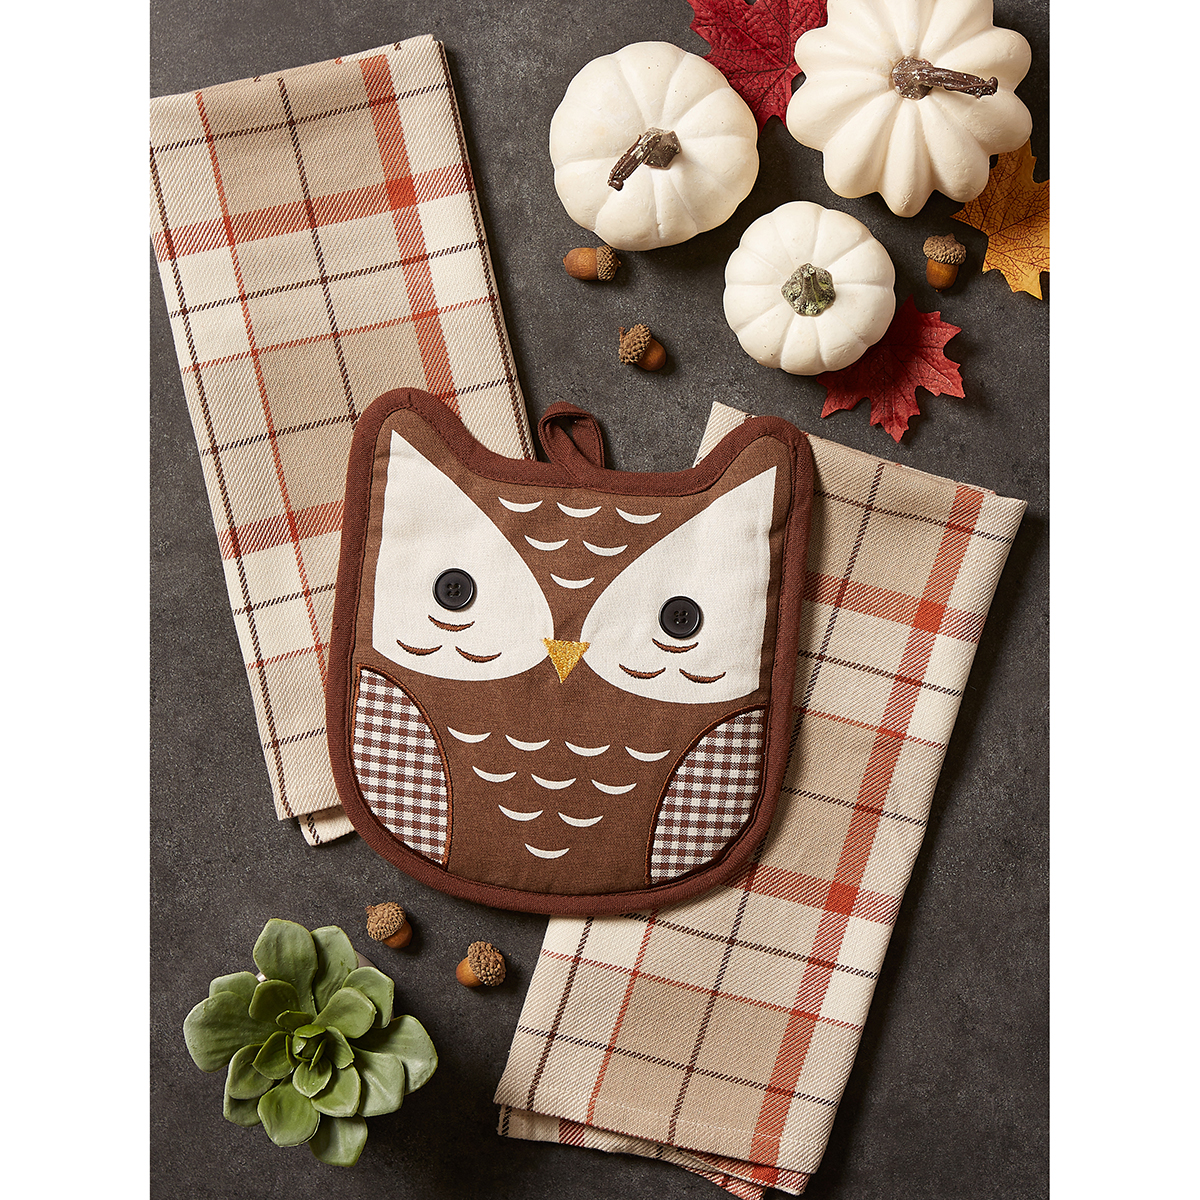 DII(R) Autumn Owl Potholder And Kitchen Towel Set Of 3